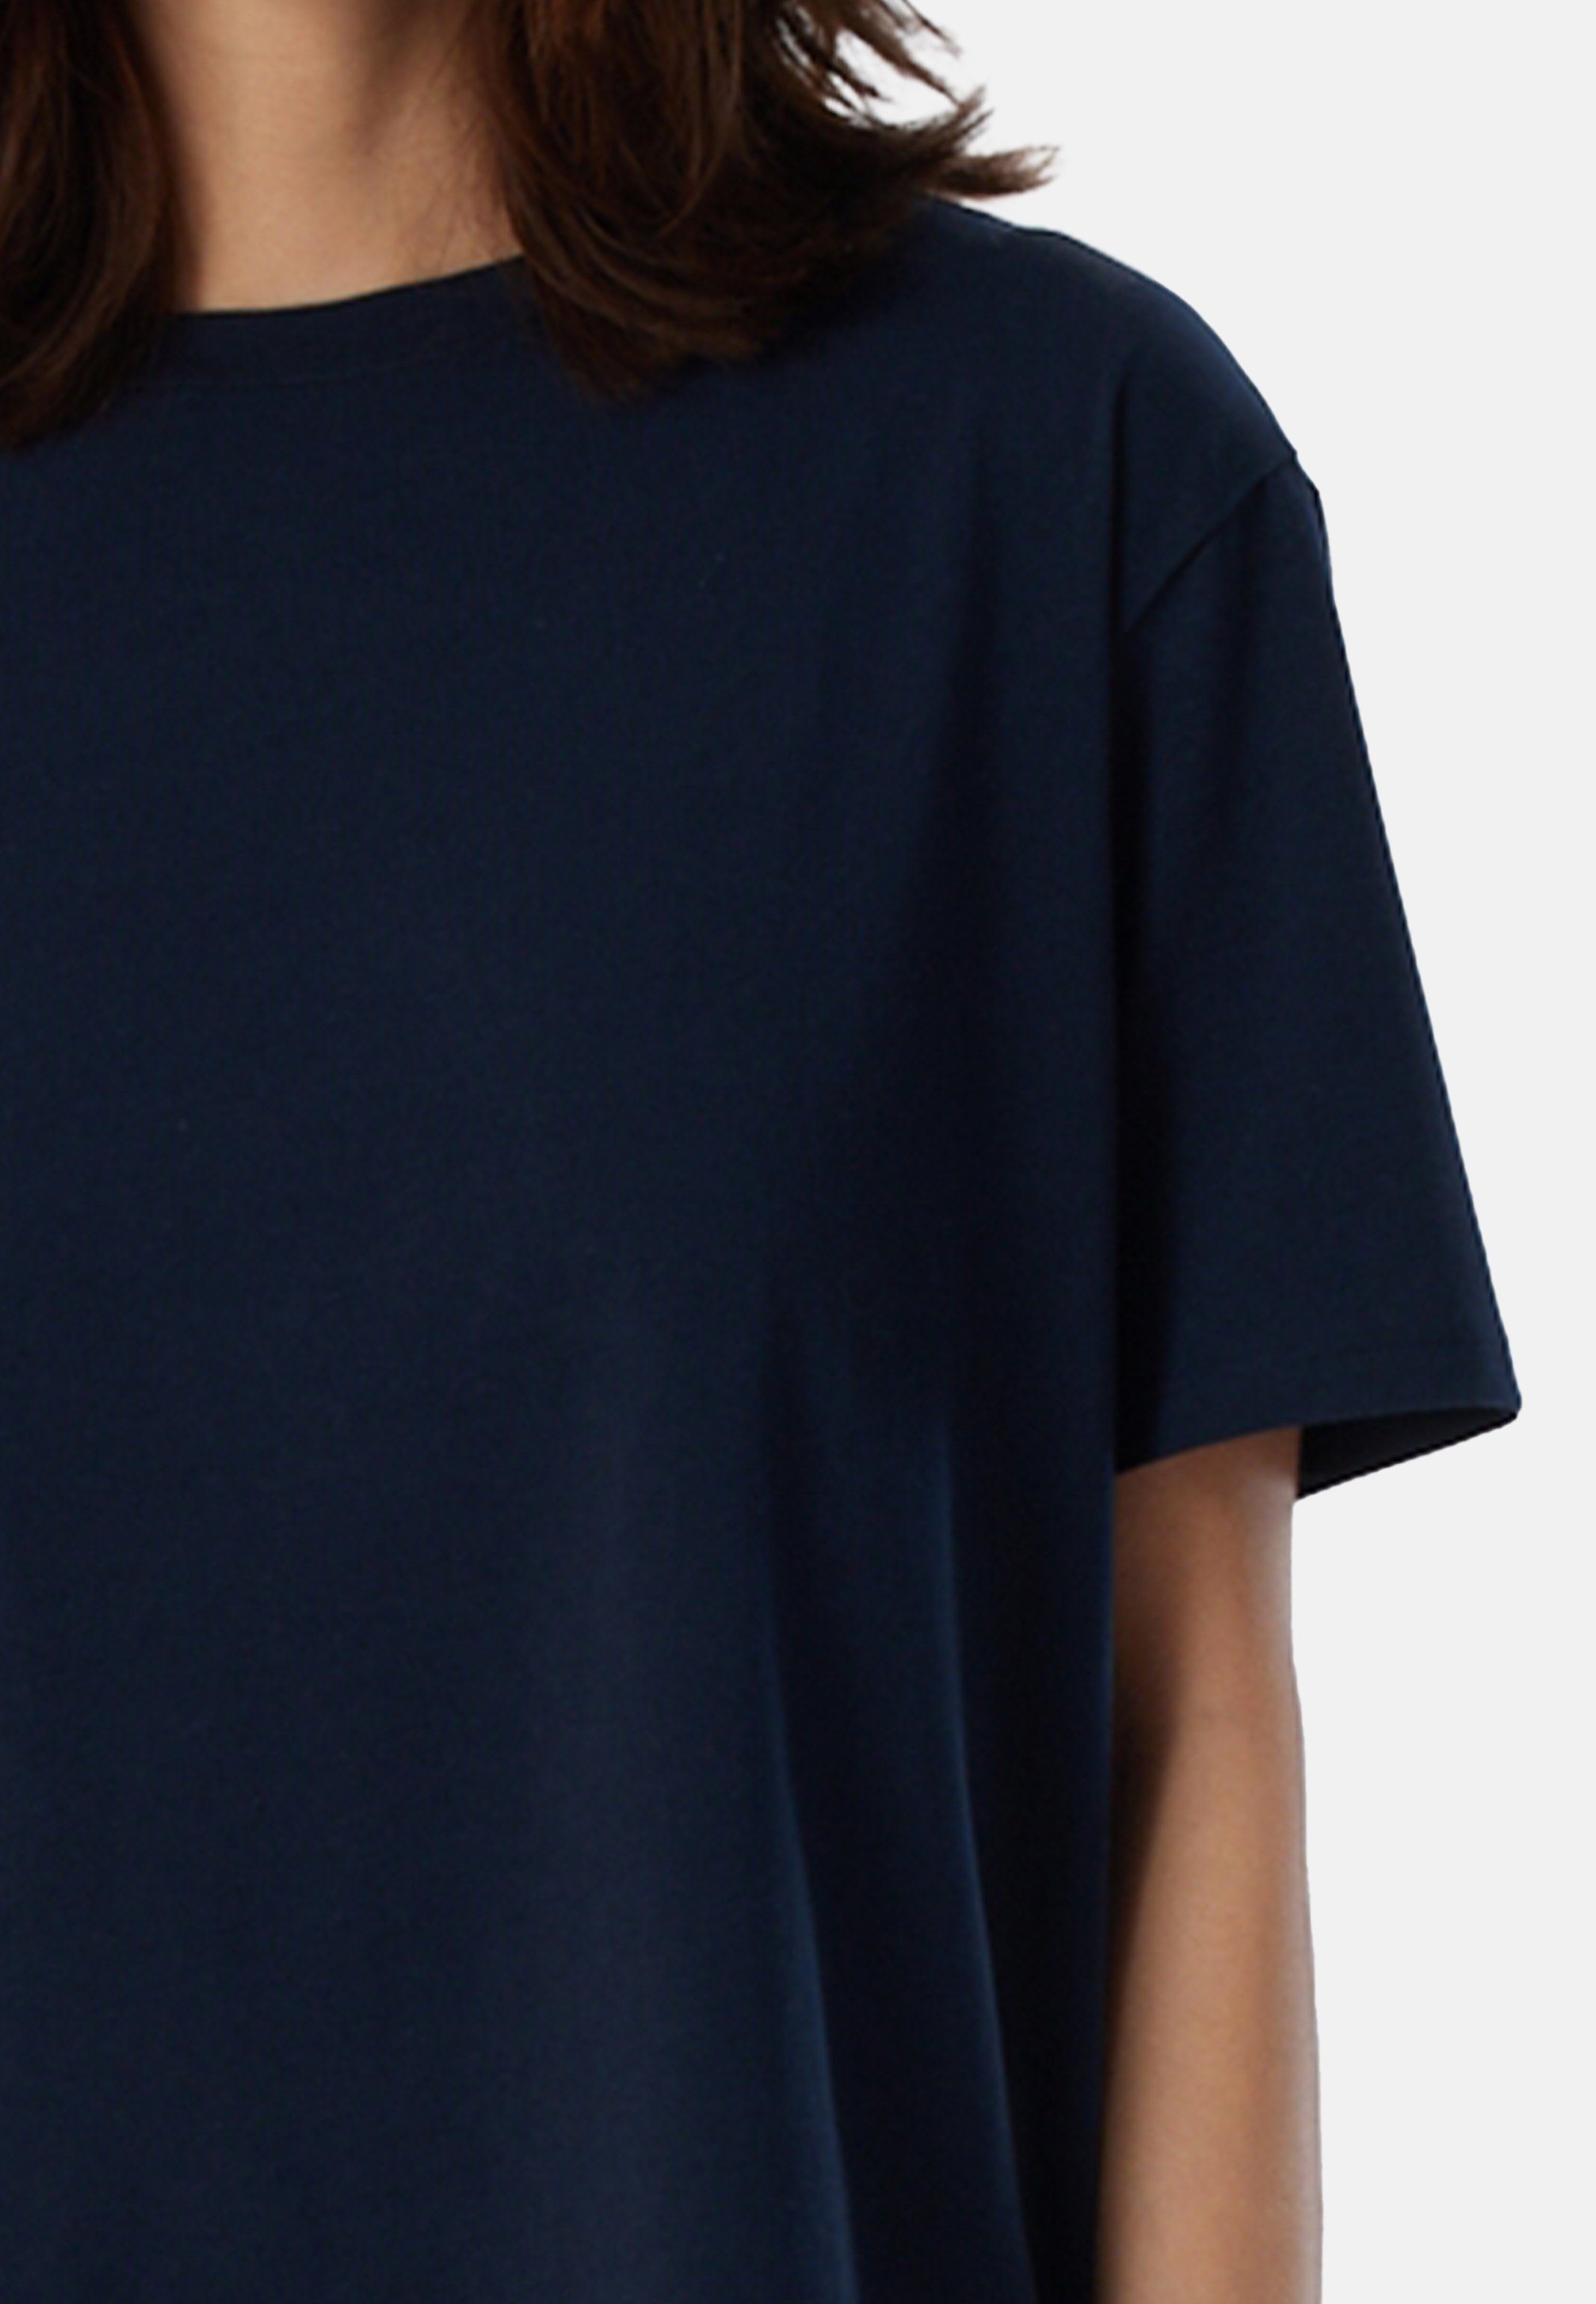 & Mix Baumwolle - (1-tlg) Schlafanzug Organic Cotton Shirt Dunkelblau kurzarm Pyjamaoberteil Schiesser Relax -